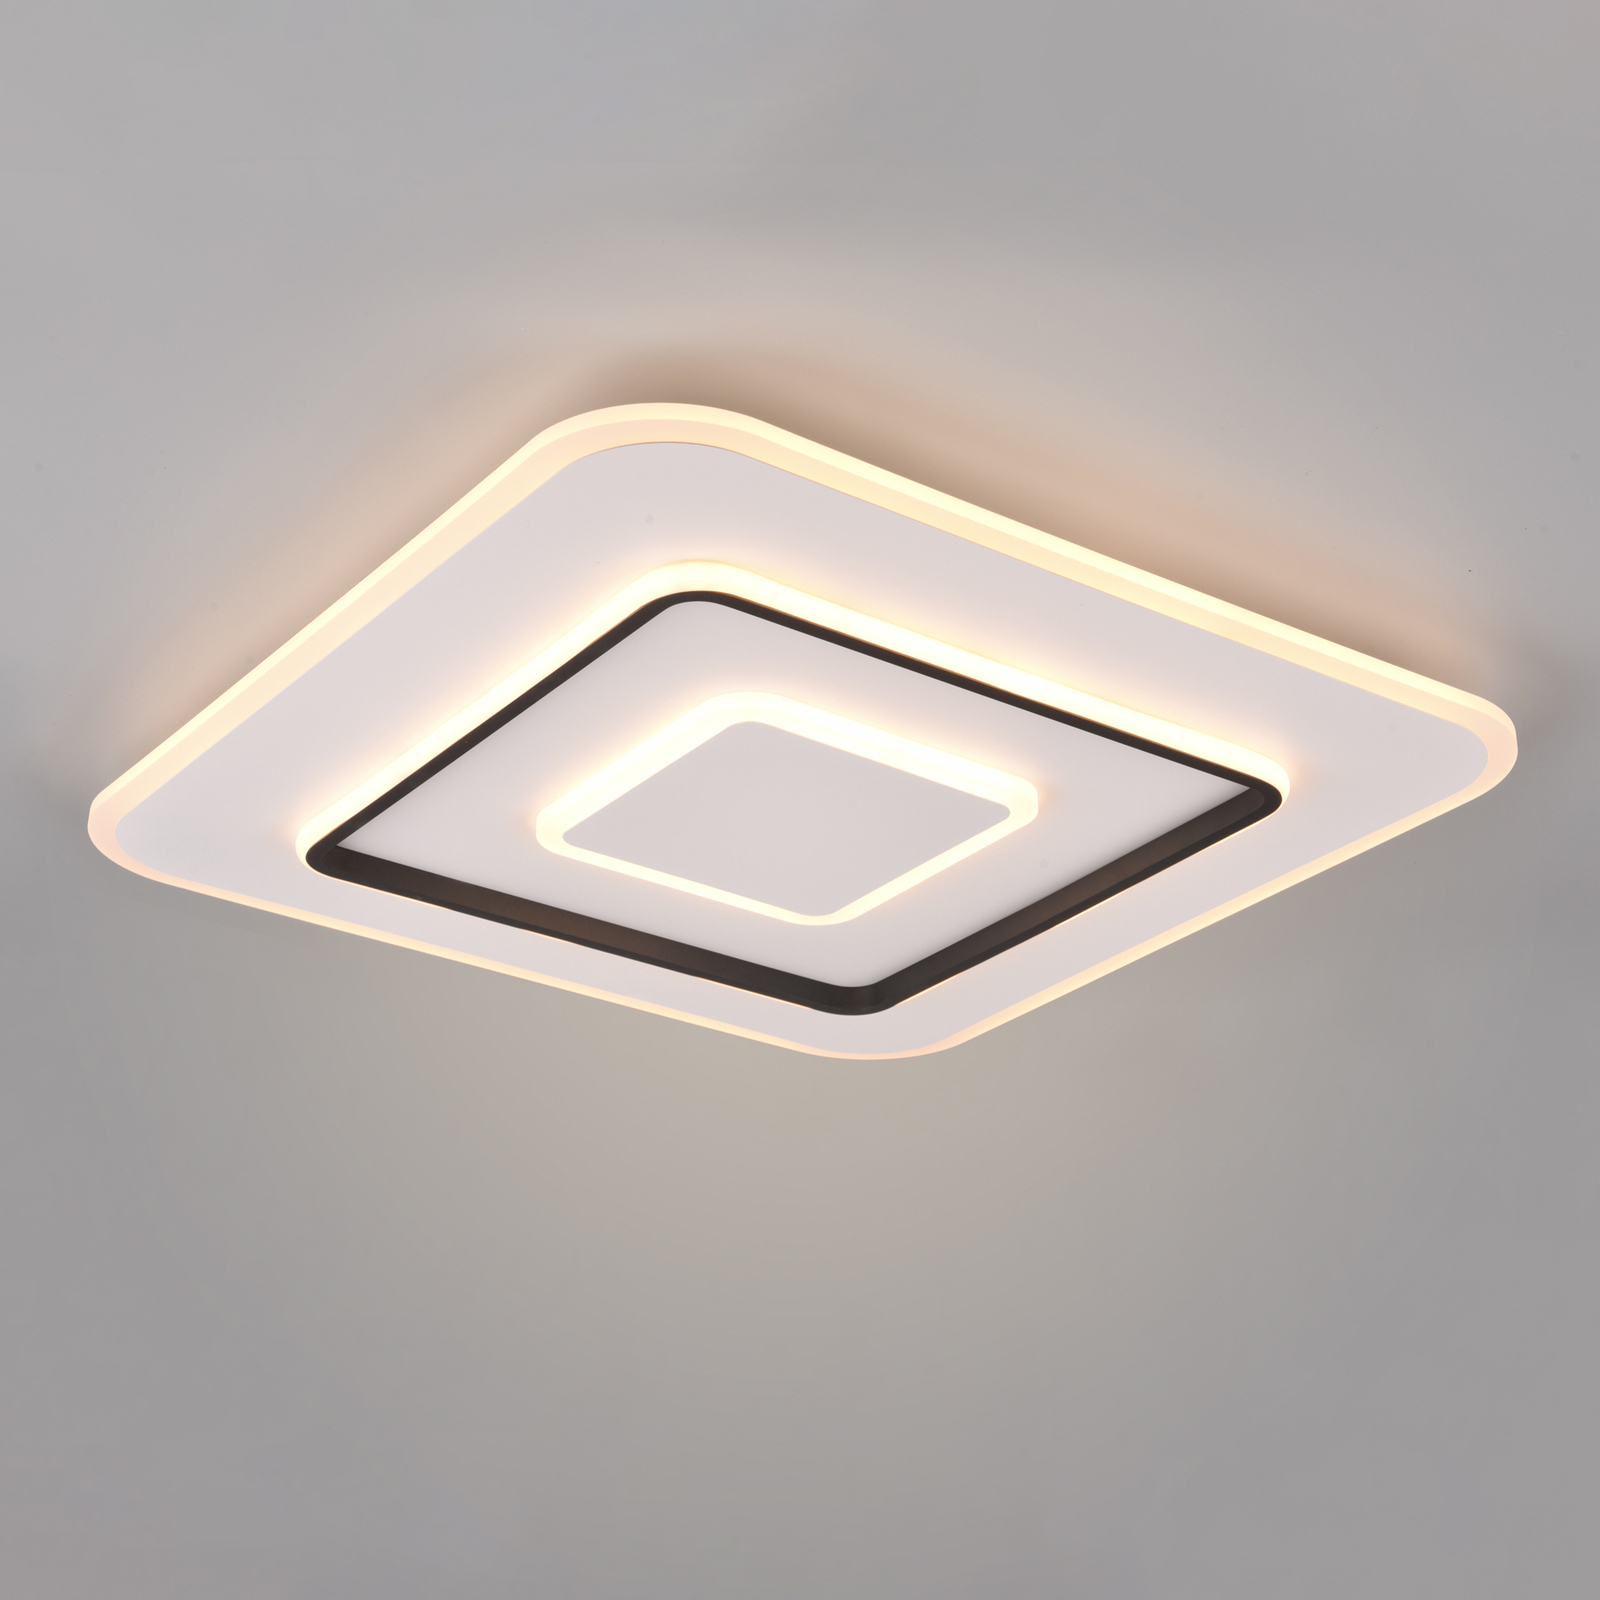 LED-taklampa Jora vinkelformad, 60 x 60 cm